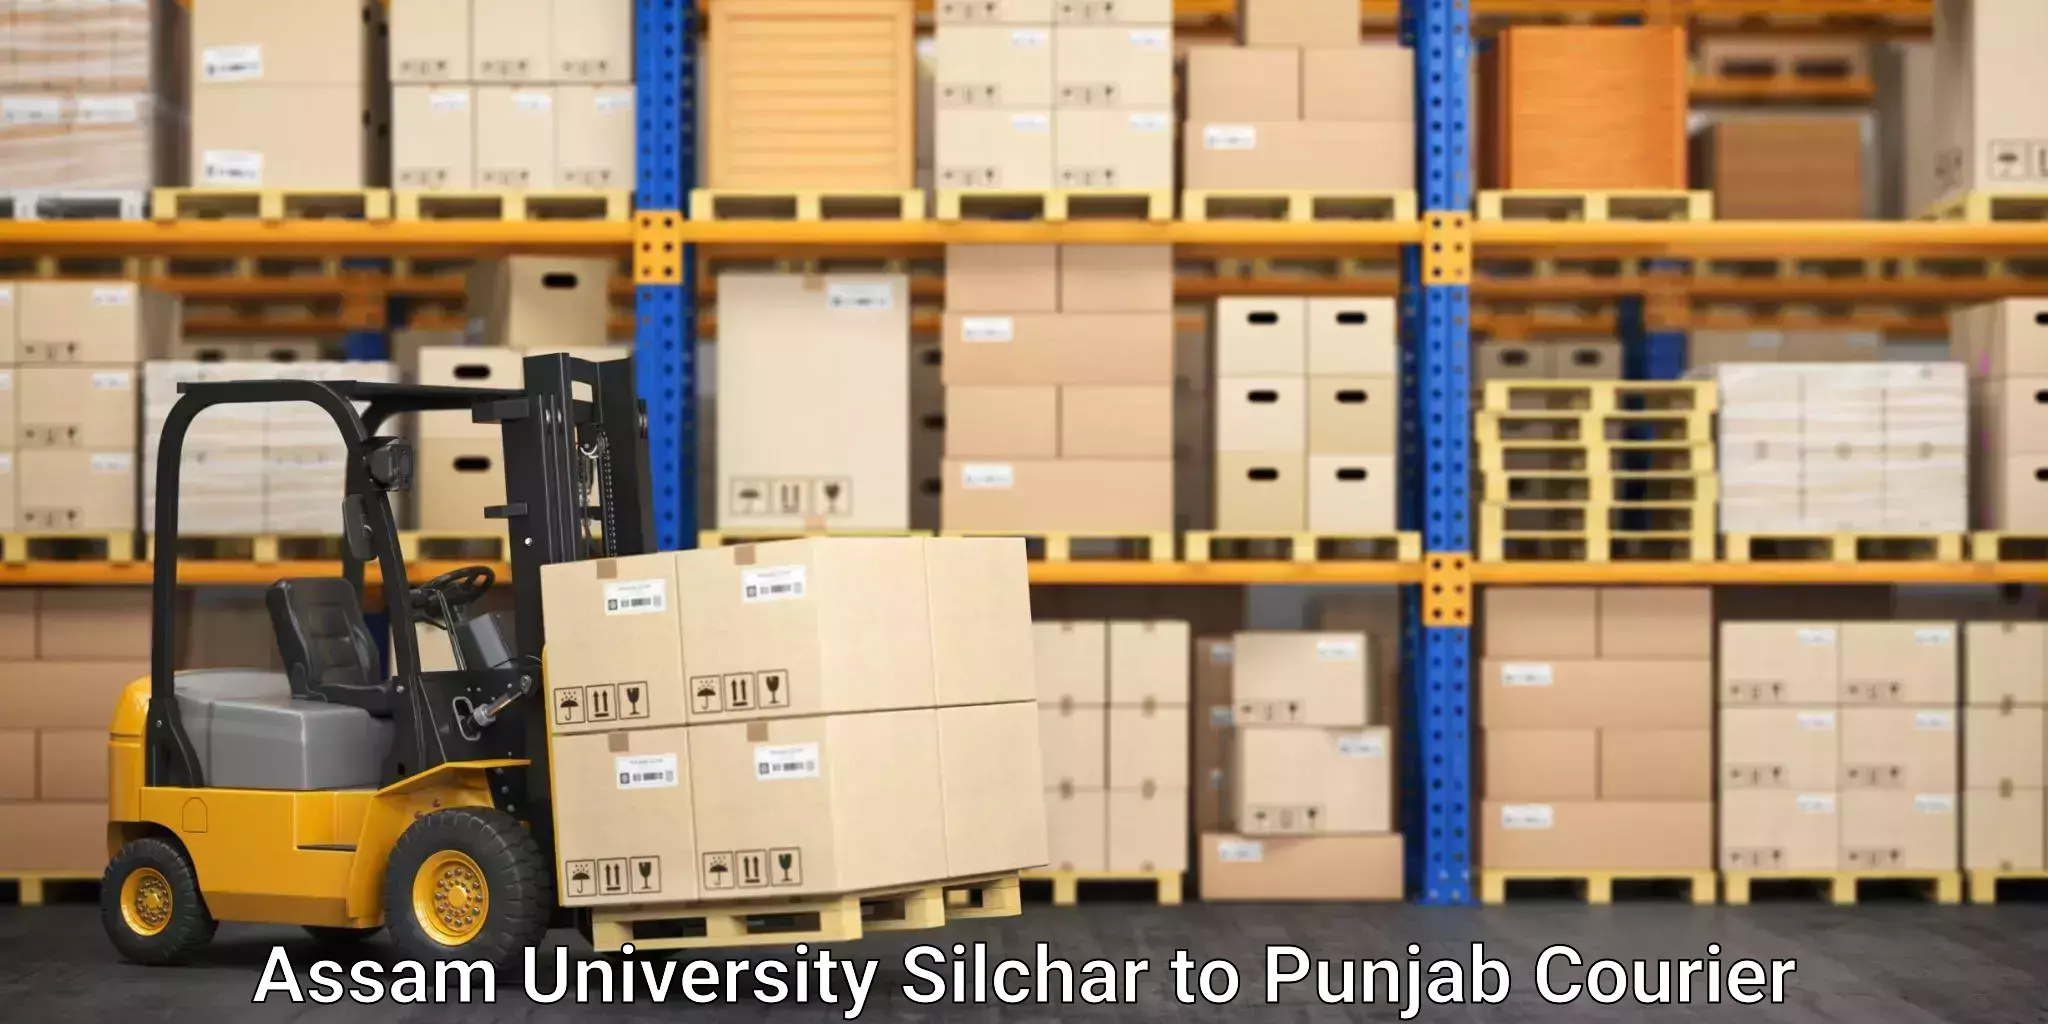 Secure shipping methods Assam University Silchar to Dinanagar